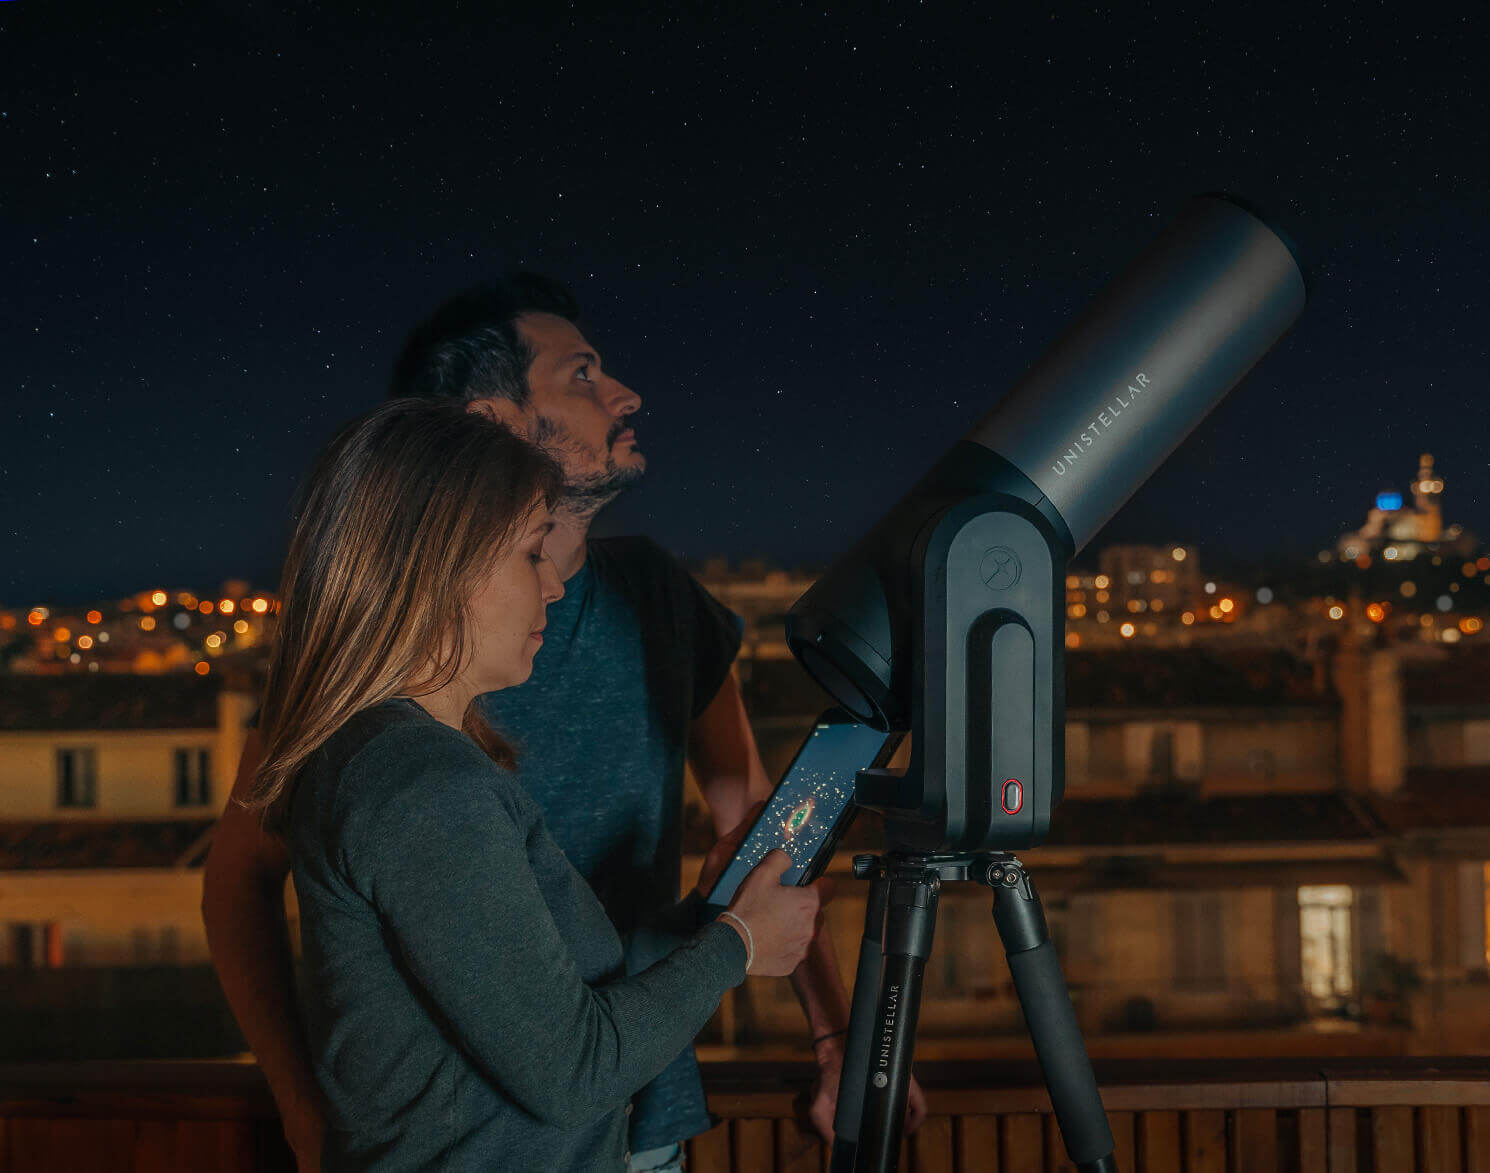 Smart telescope, light pollution telescope, electronic telescope images